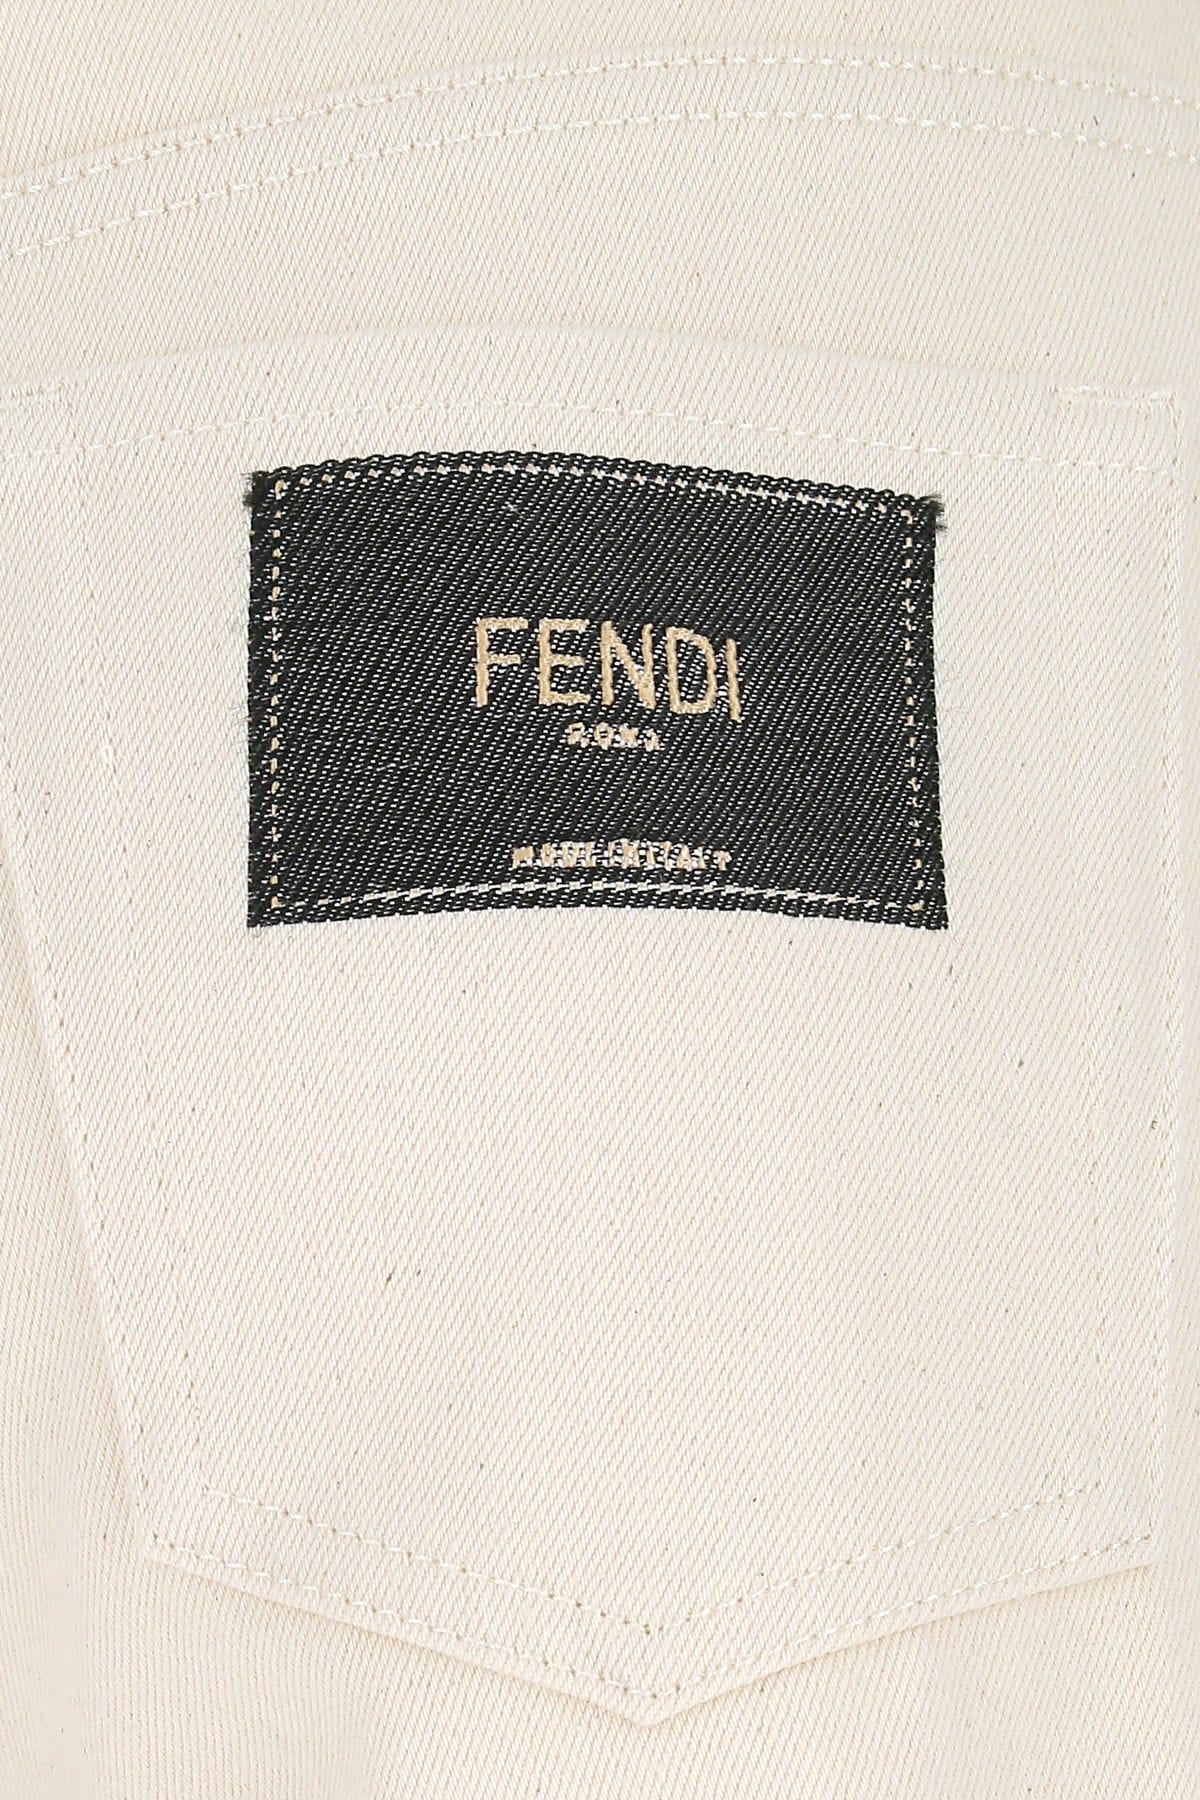 Shop Fendi Ivory Denim Jeans In White